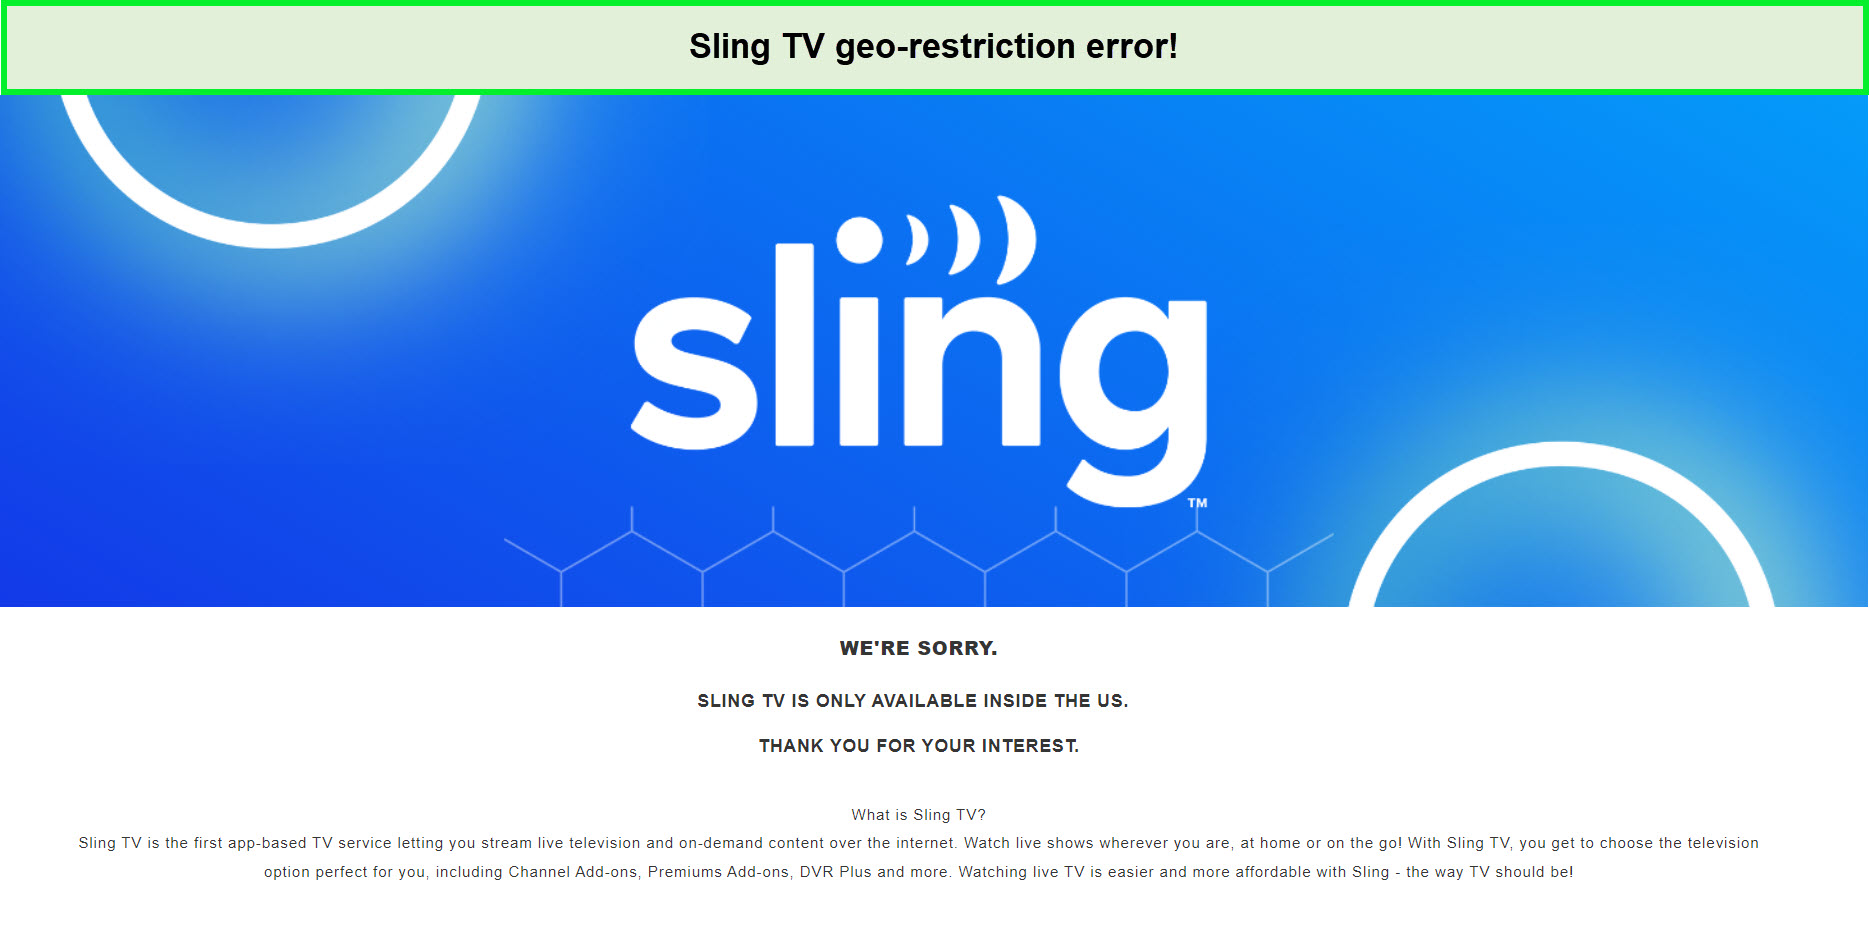 sling-geo-restriction-error-in-india